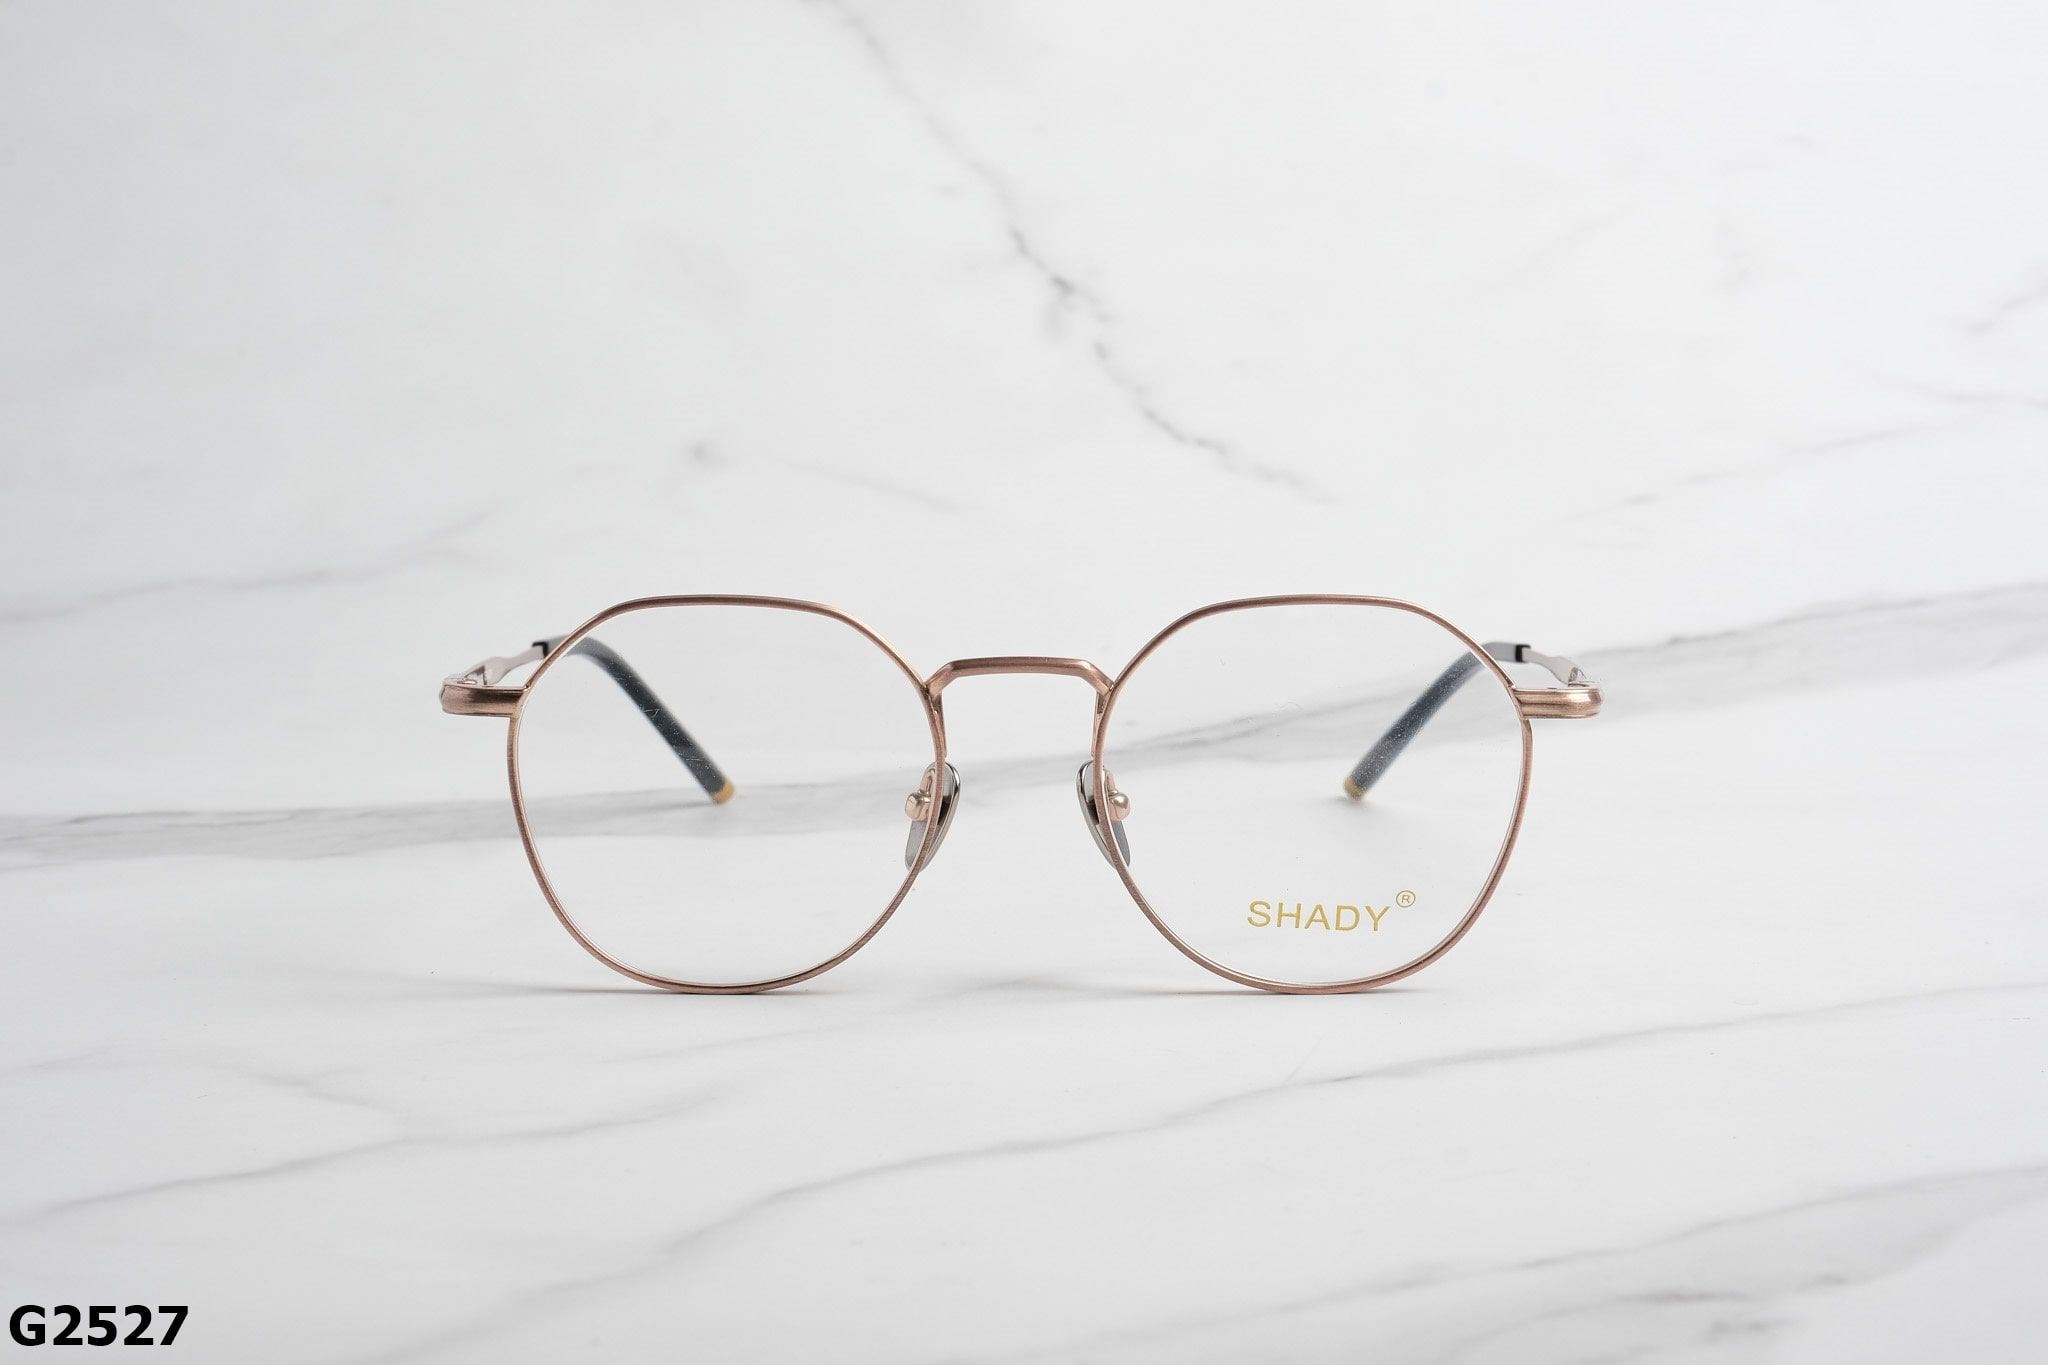  SHADY Eyewear - Glasses - G2527 